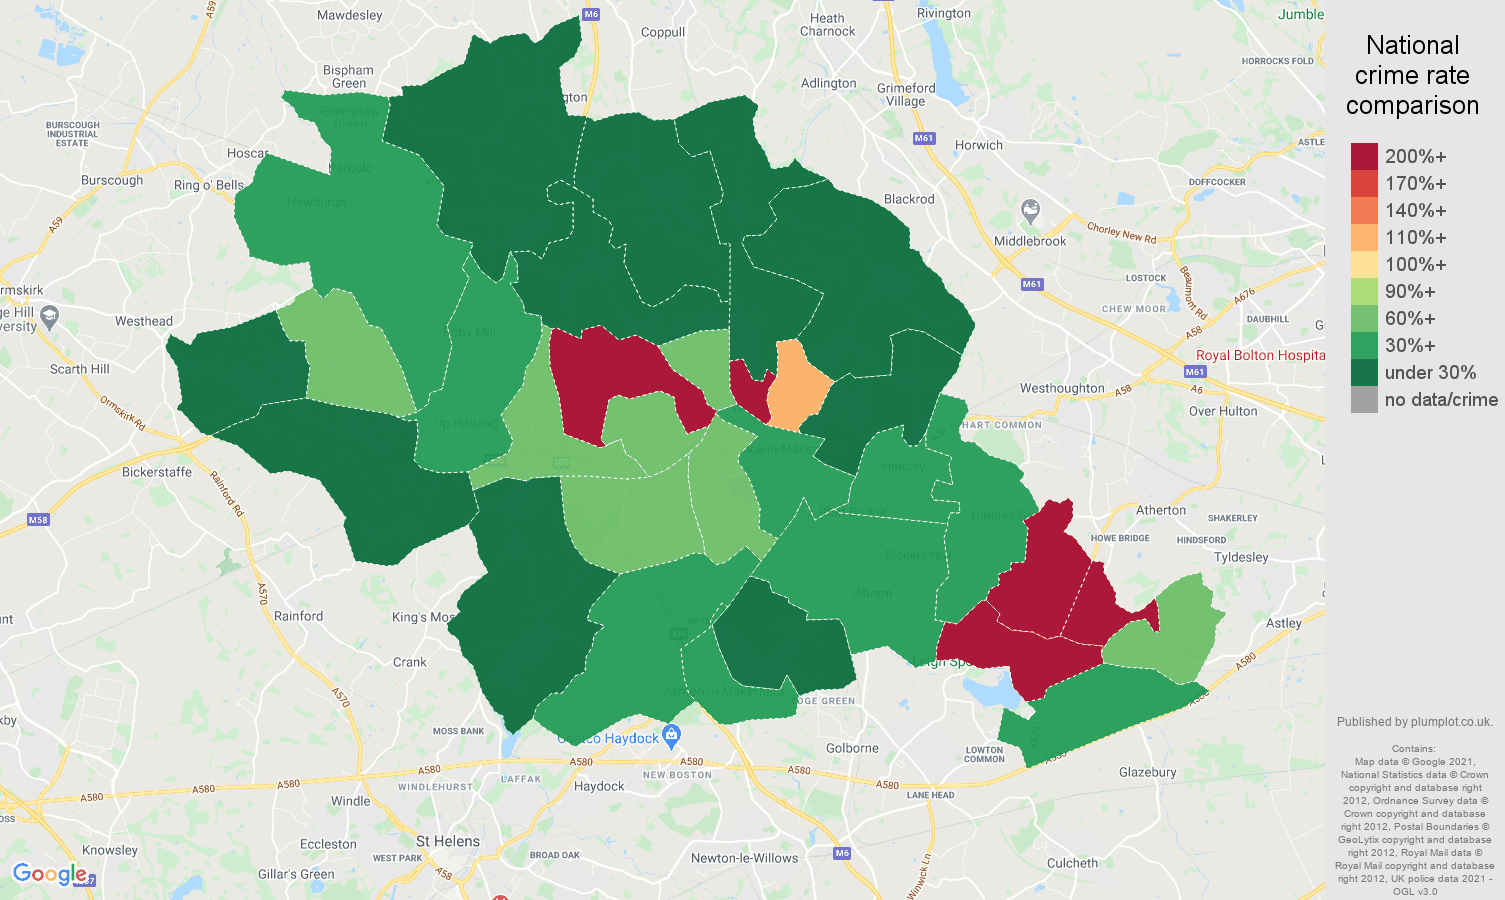 Wigan shoplifting crime rate comparison map